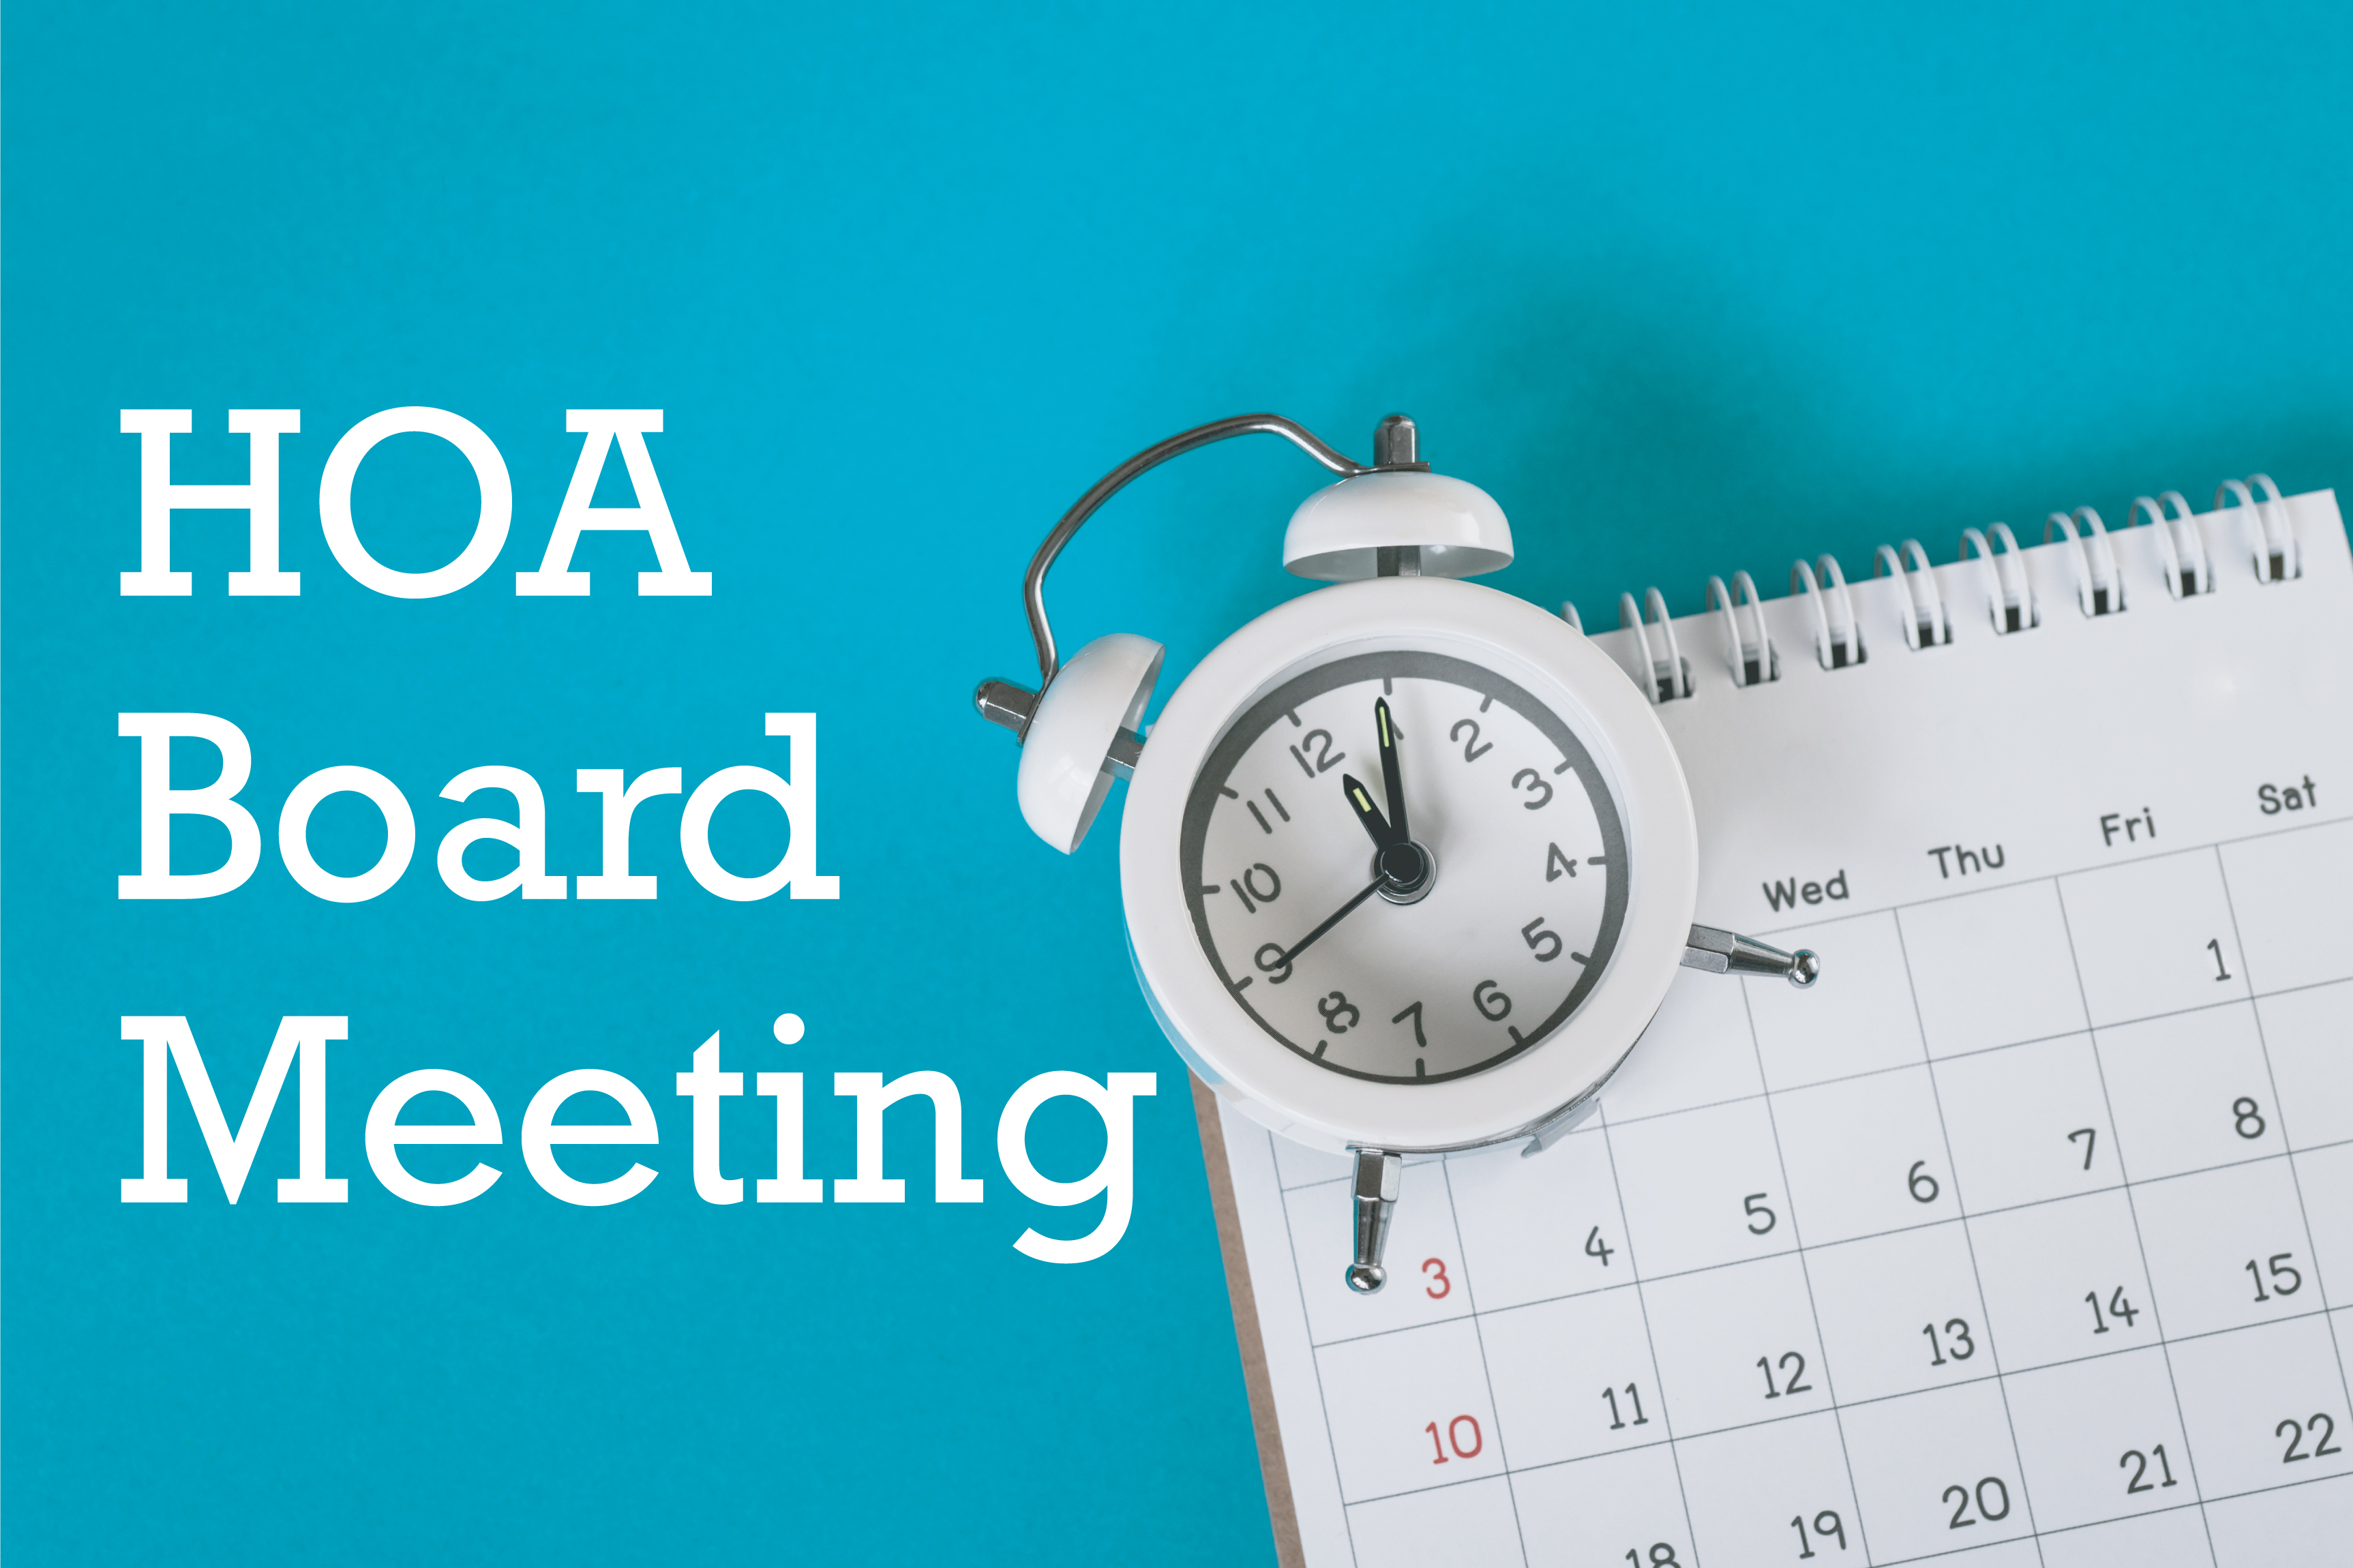 Concord Bridge HOA Board Meeting Set for February 20